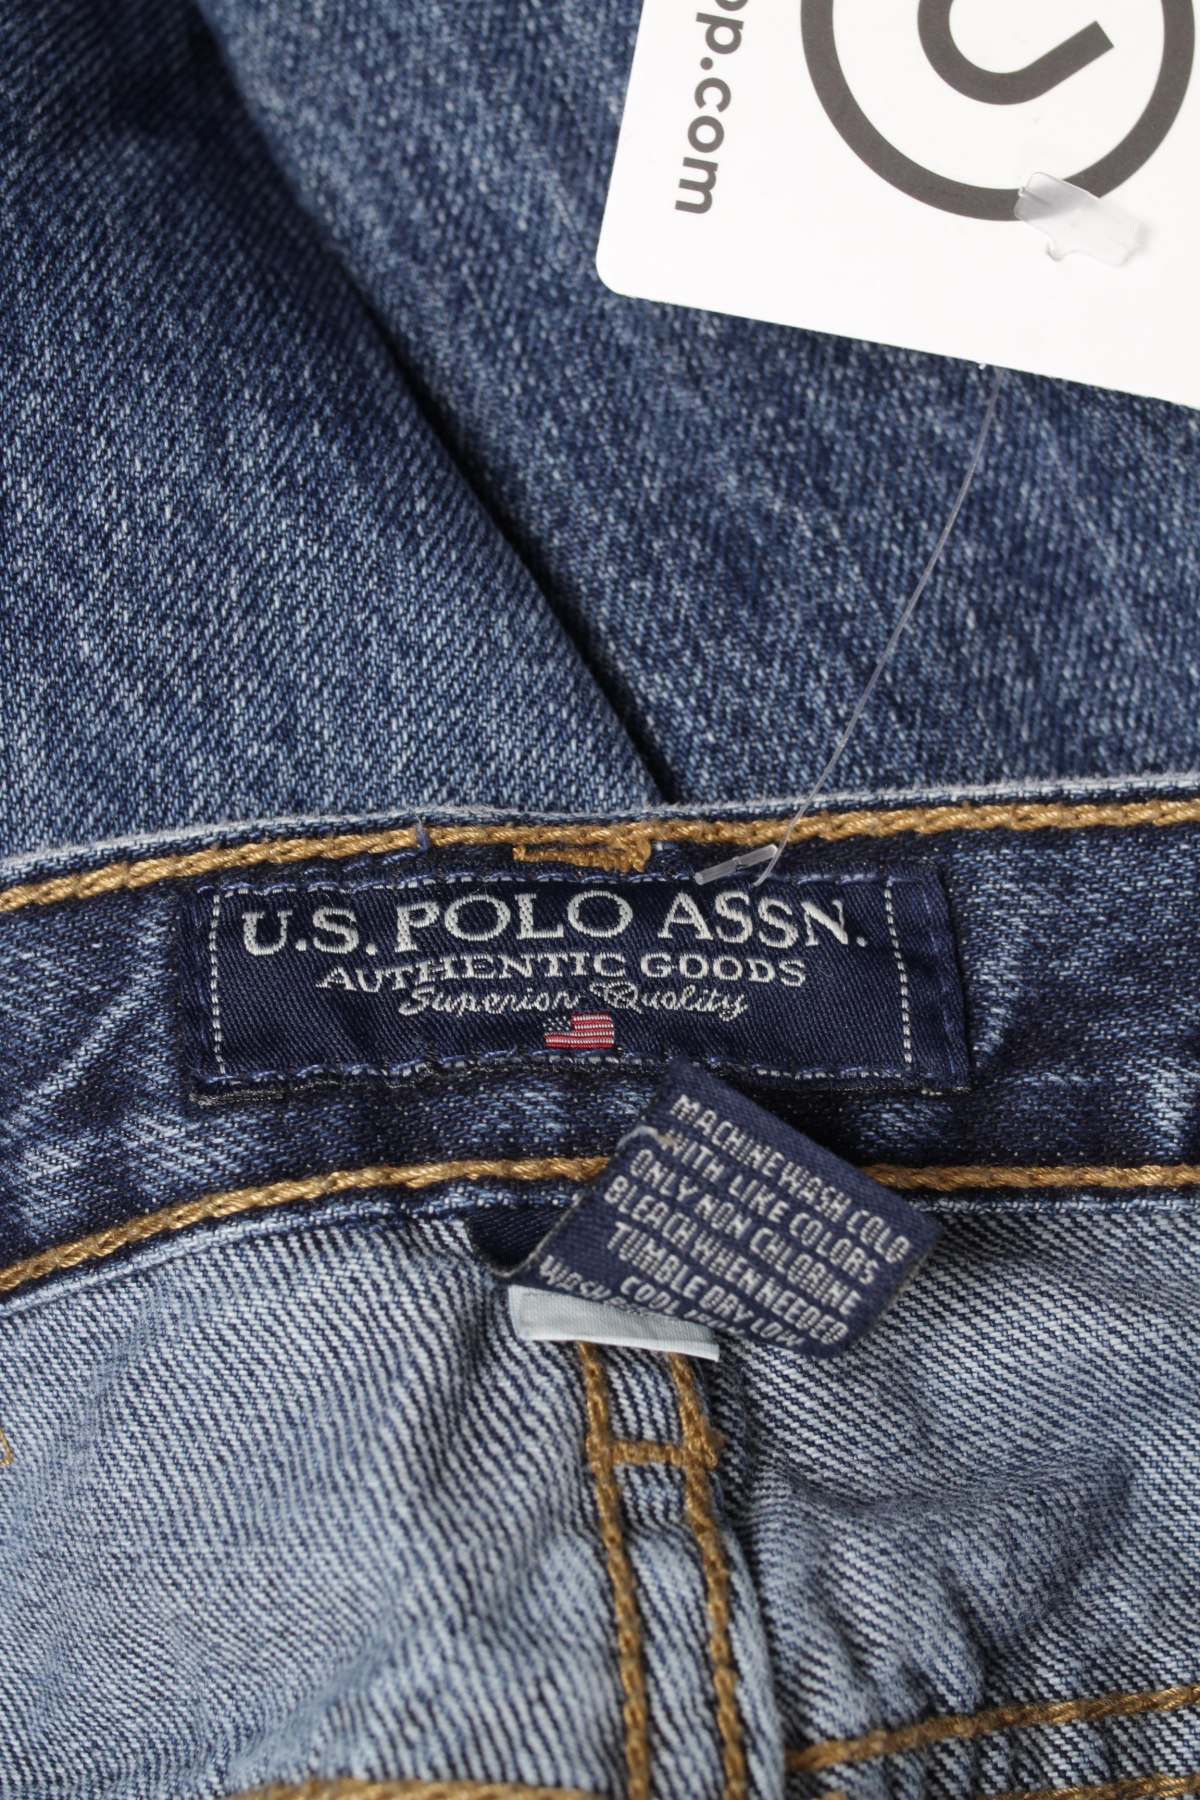 stand out option Postman Blugi de bărbați U.S. Polo Assn. - la preț avantajos pe Remix - #100648152